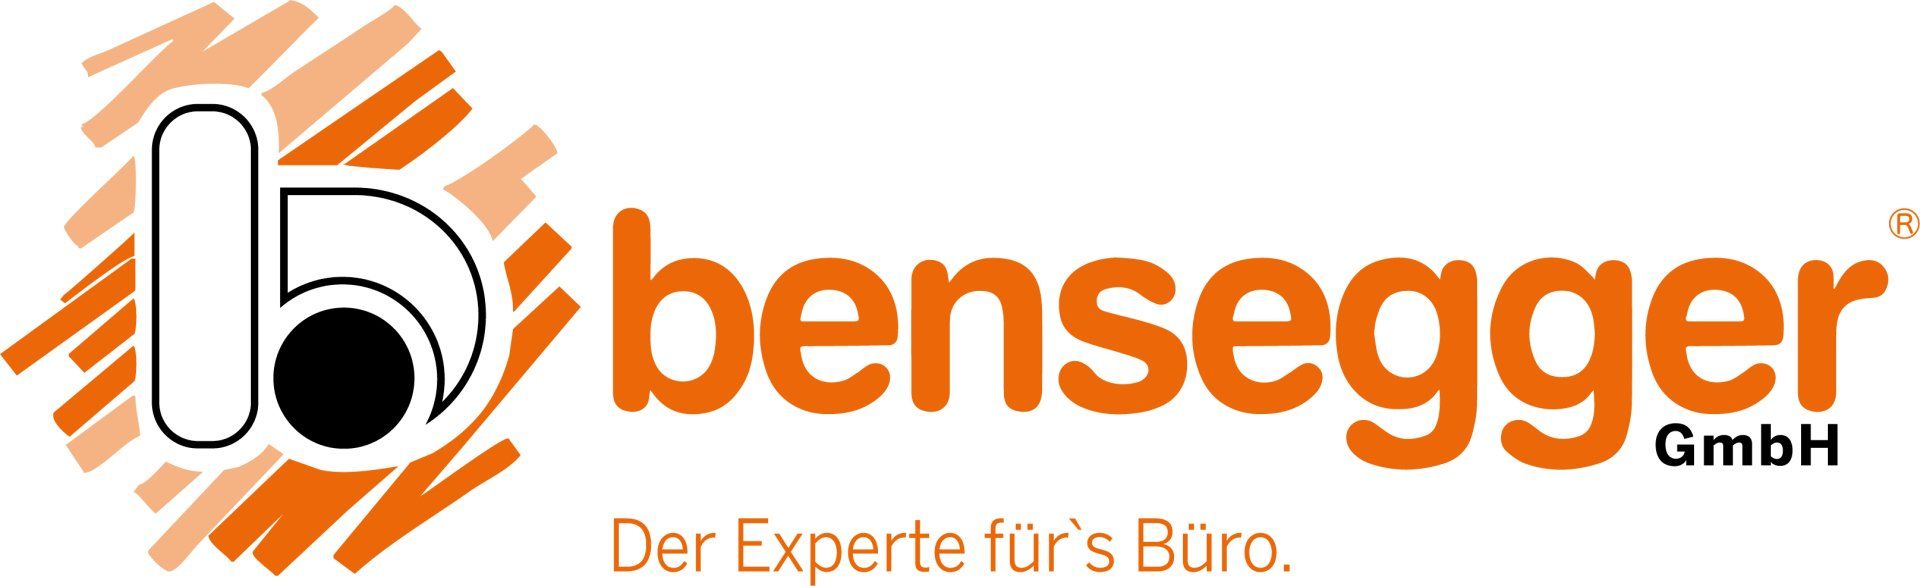 Bensegger GmbH